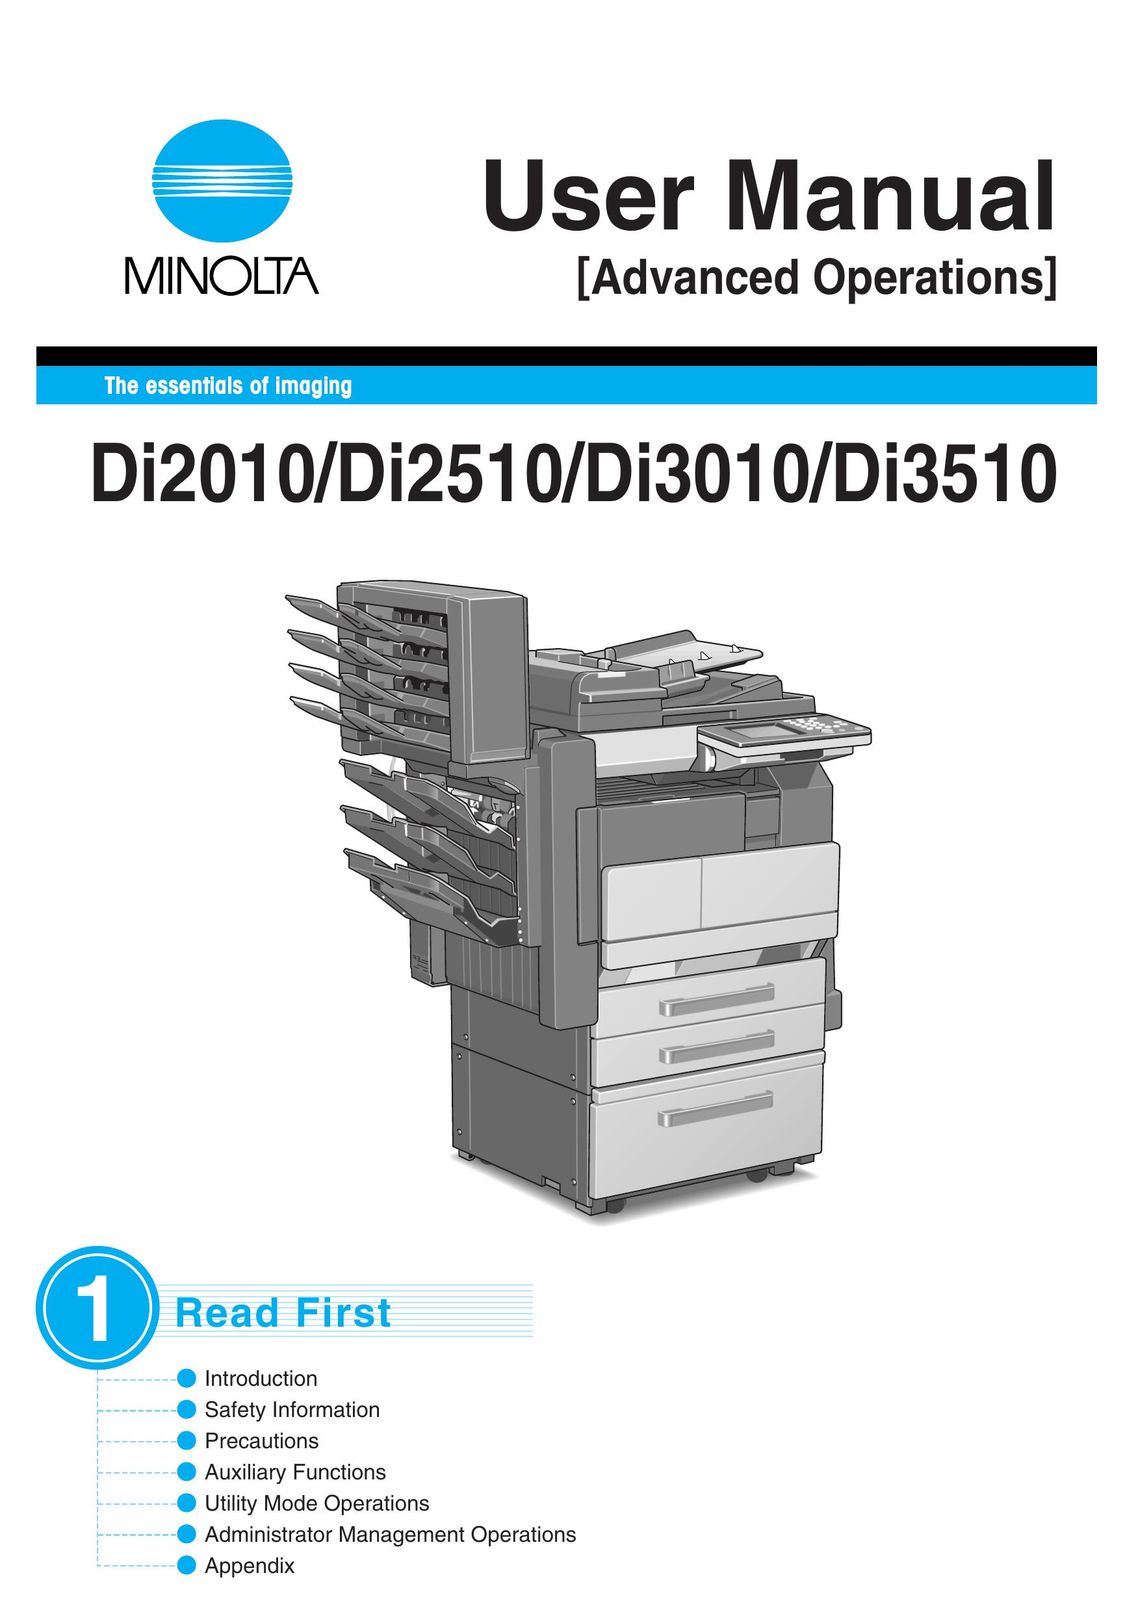 Minolta DI3010 Copier User Manual